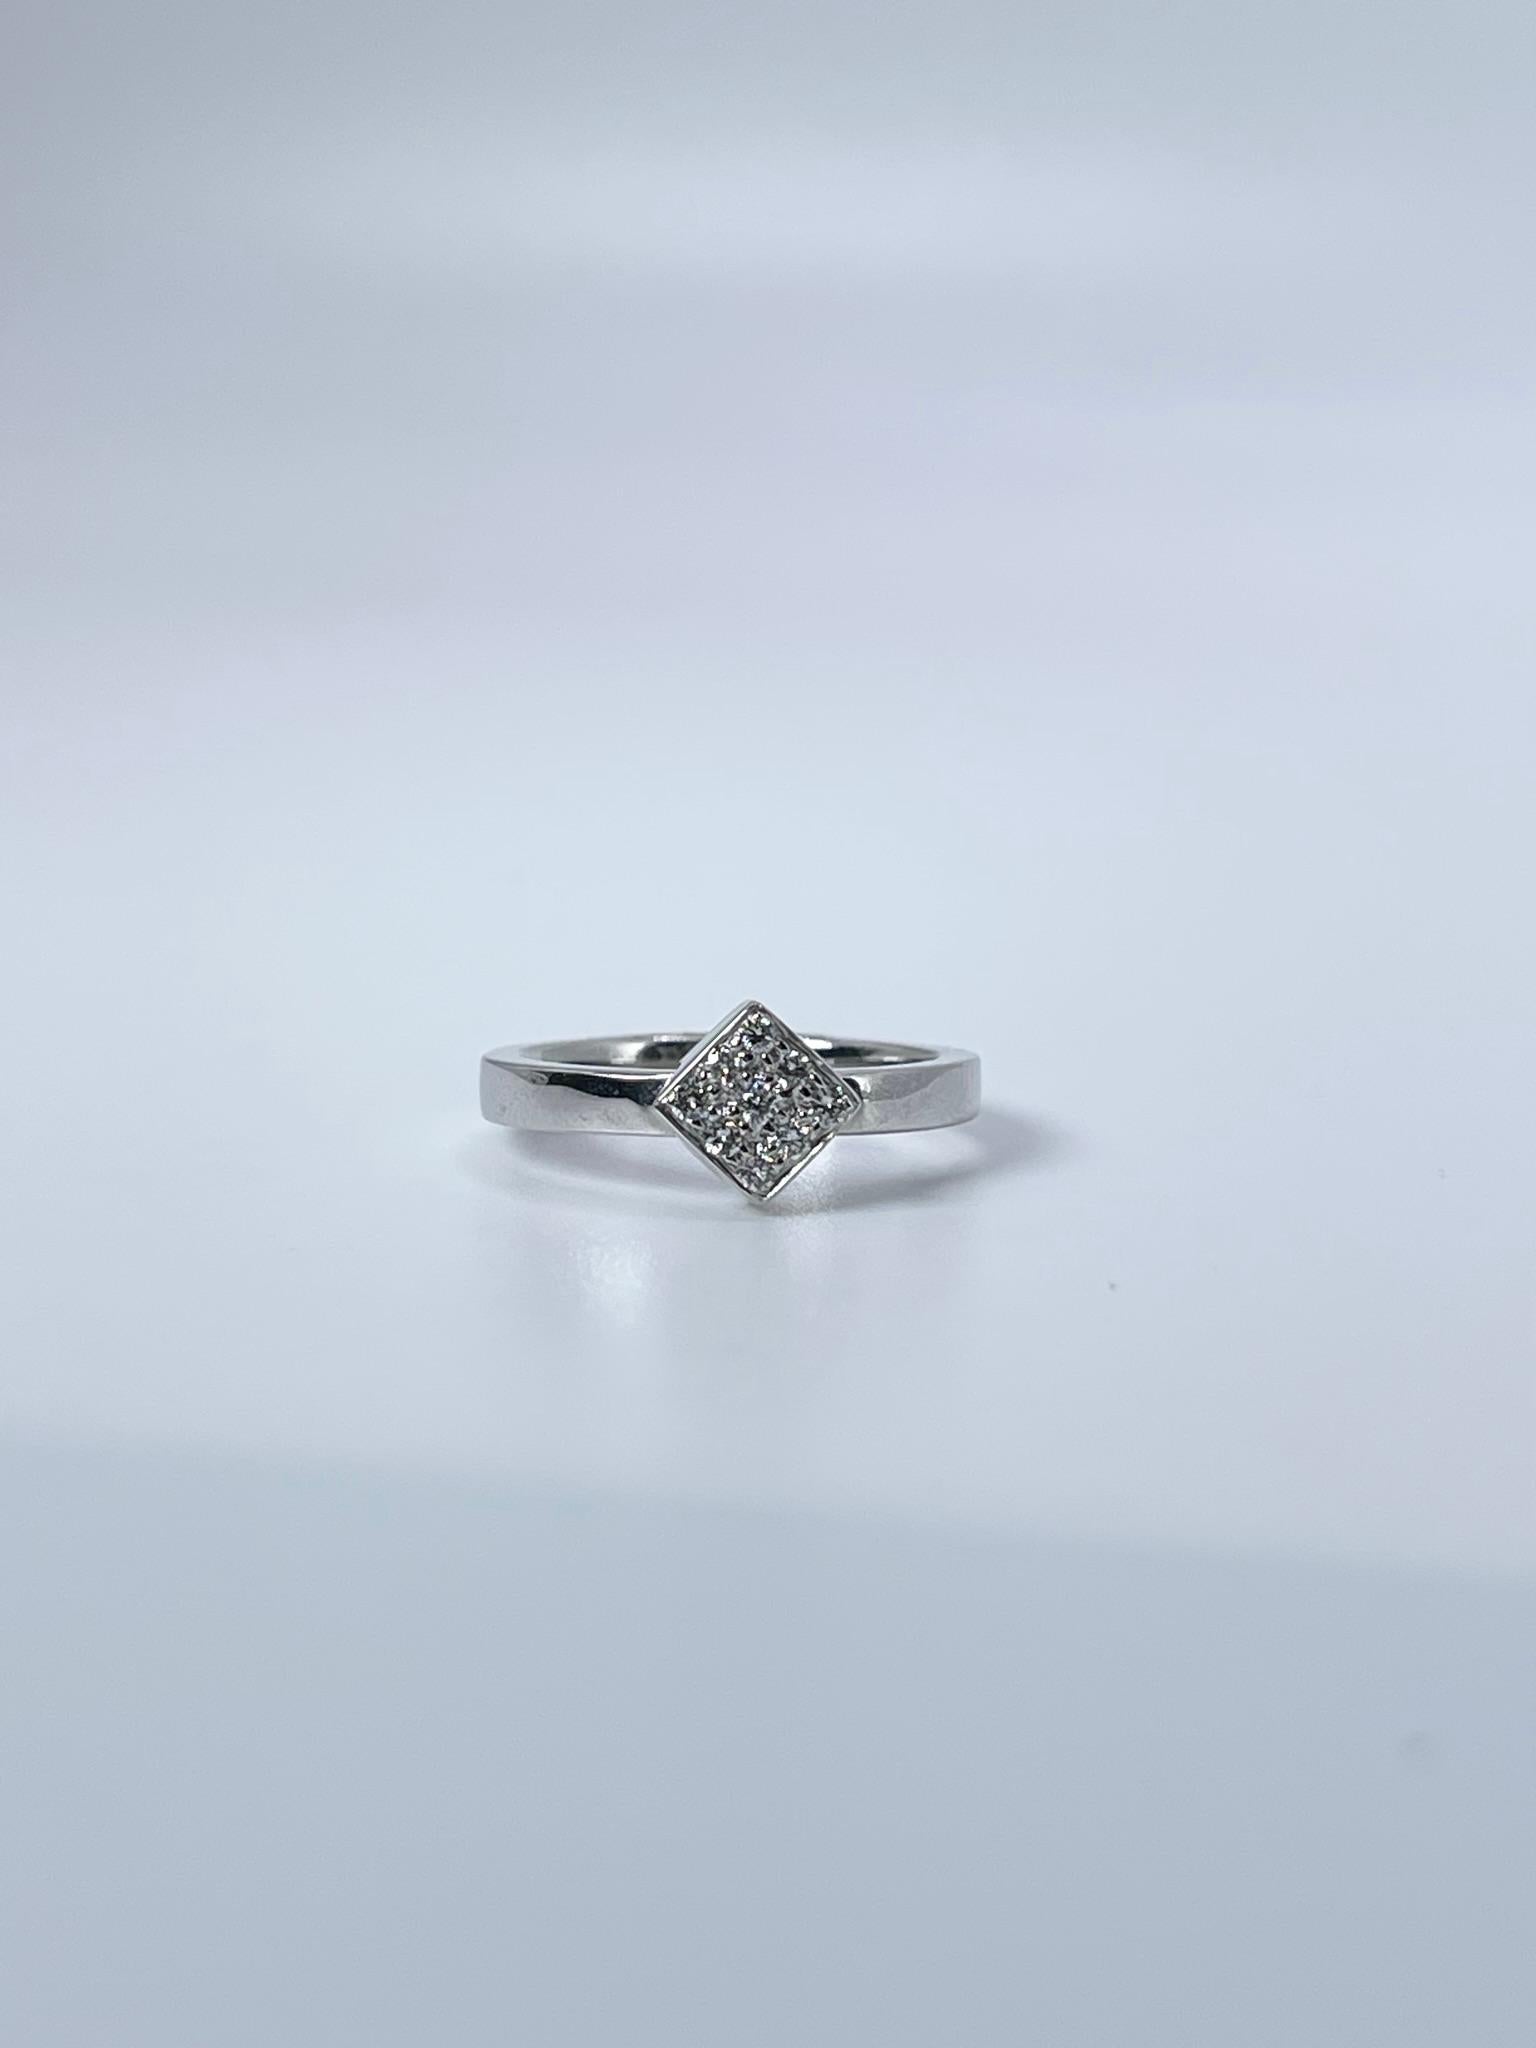 Modernist Square Diamond Ring Pave Set Ring 18KT White Gold Diamond Ring For Sale